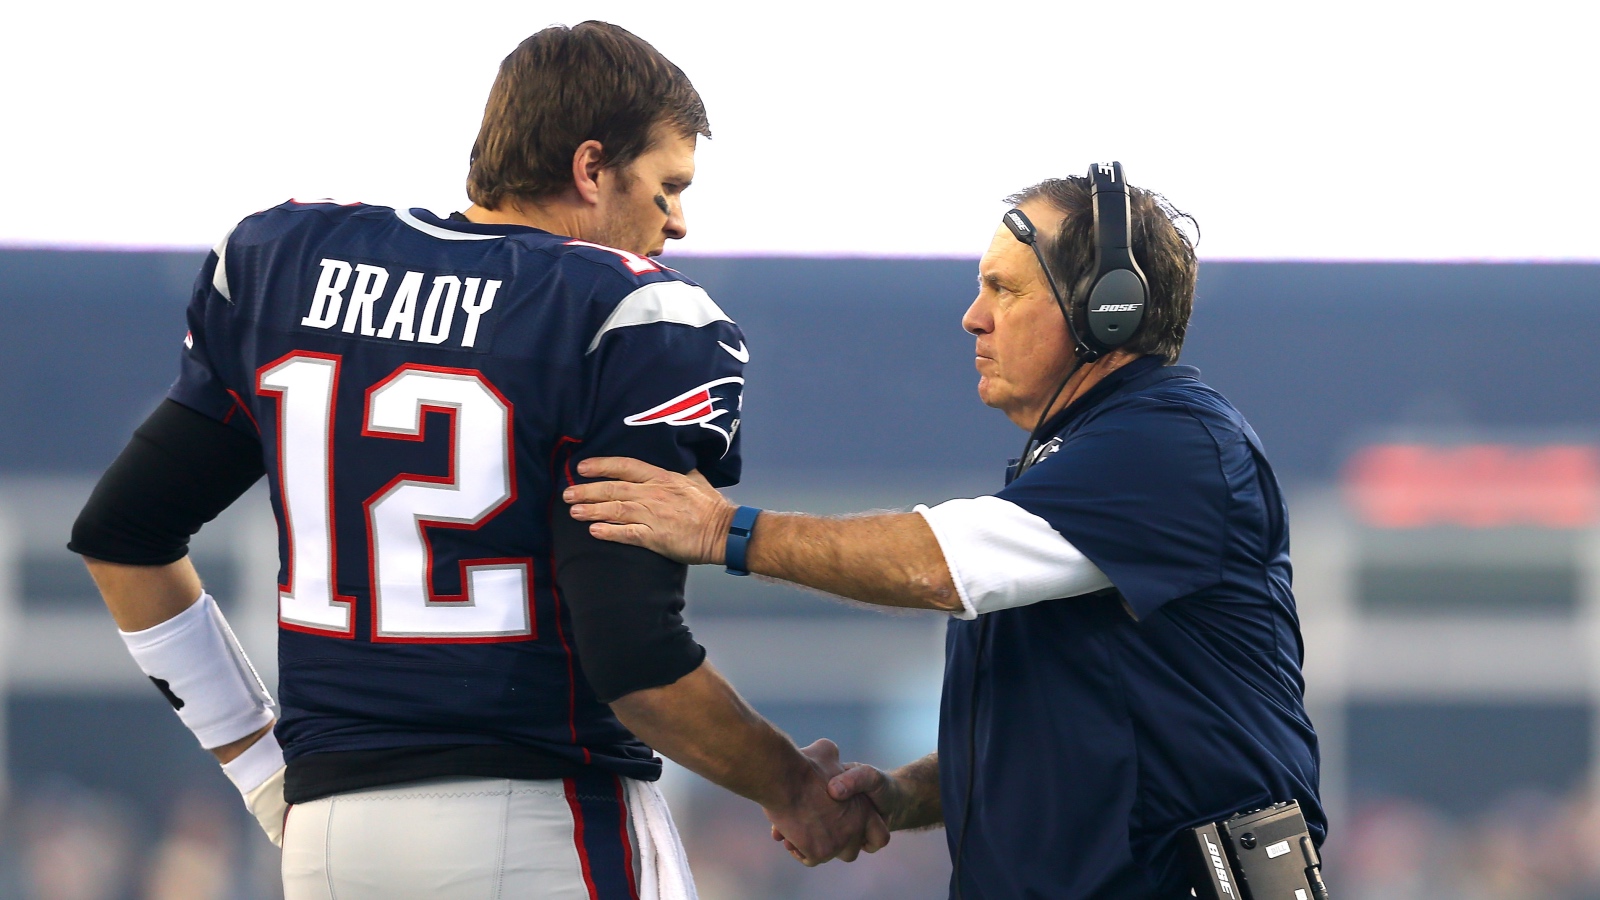 Tom Brady and Bill Belichick shaking hands